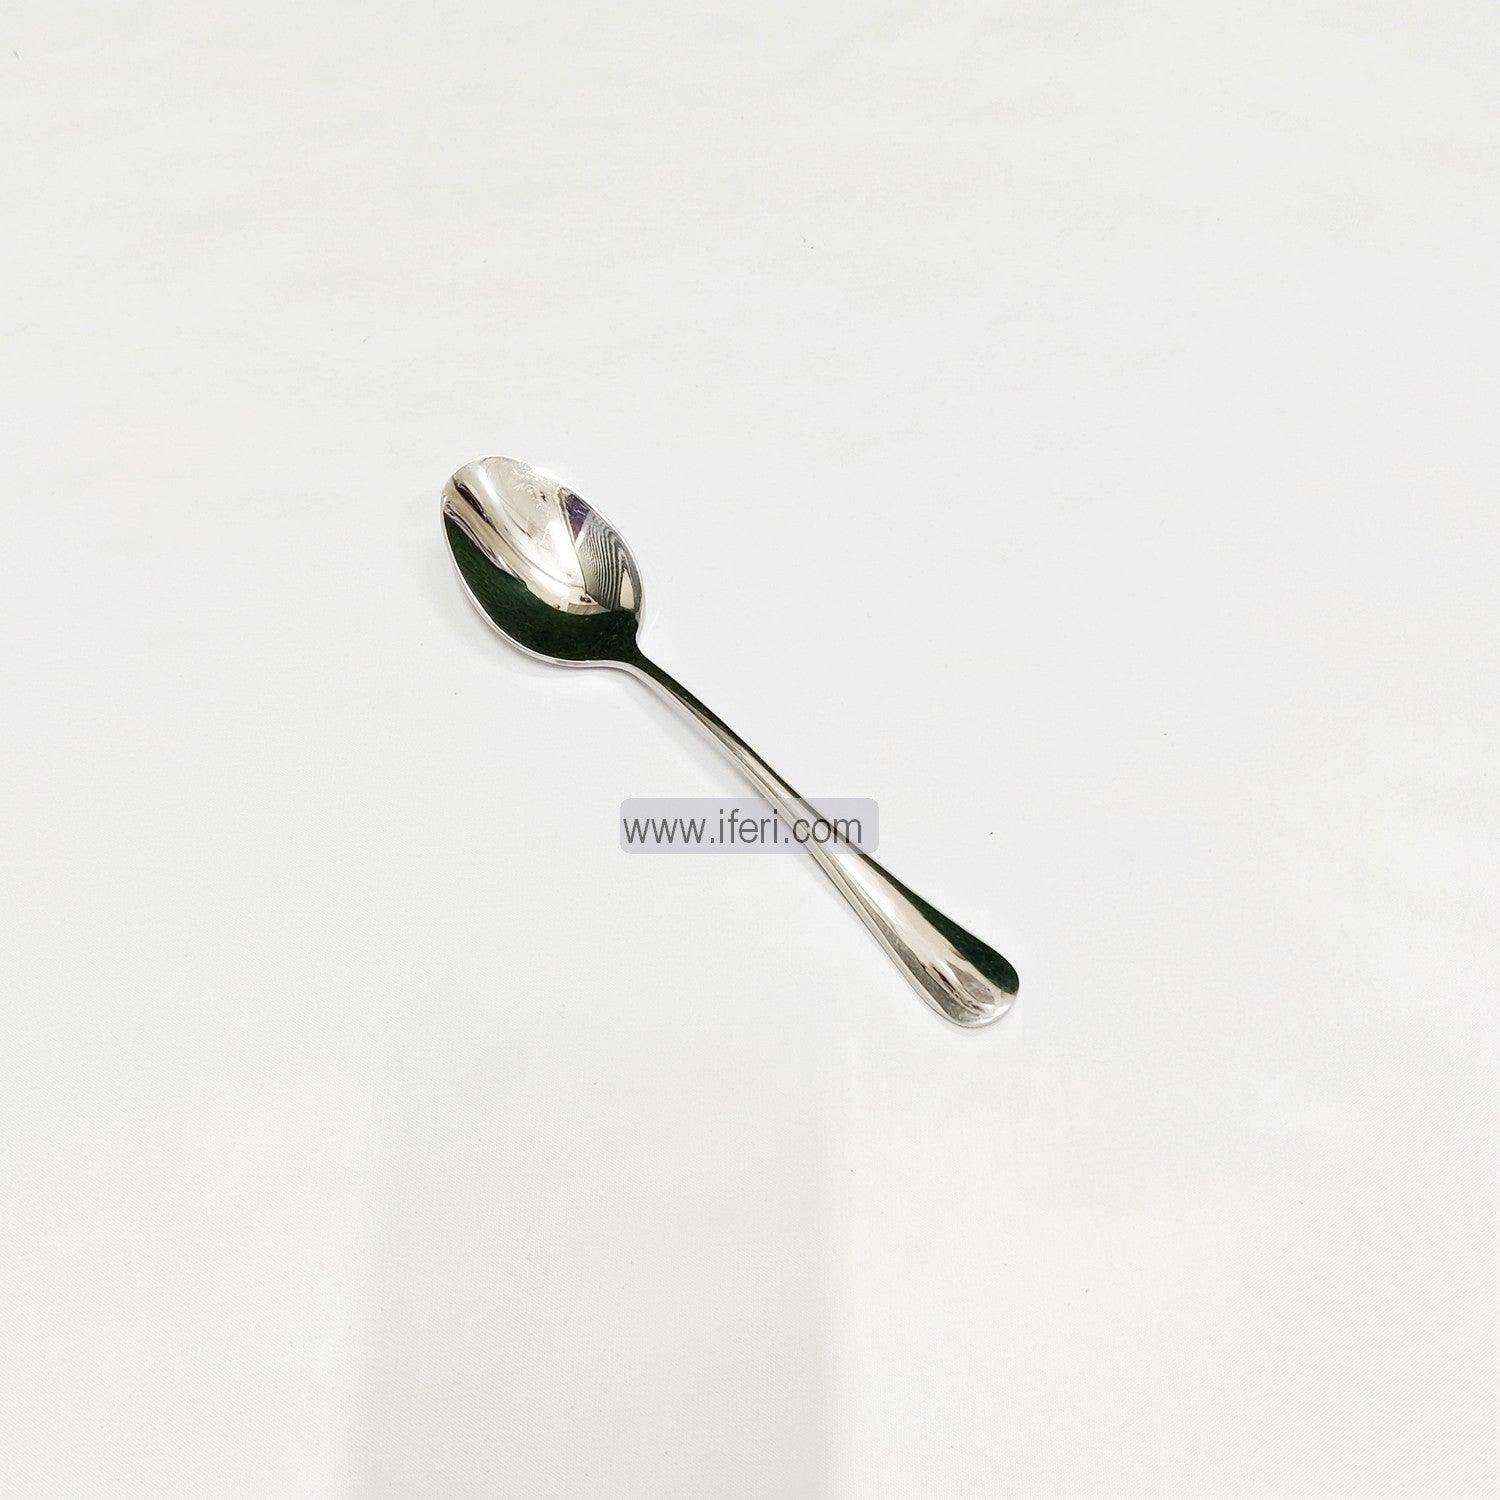 6.8 inch 6 pcs Metal Tea Spoon 10/03 Price in Bangladesh - iferi.com